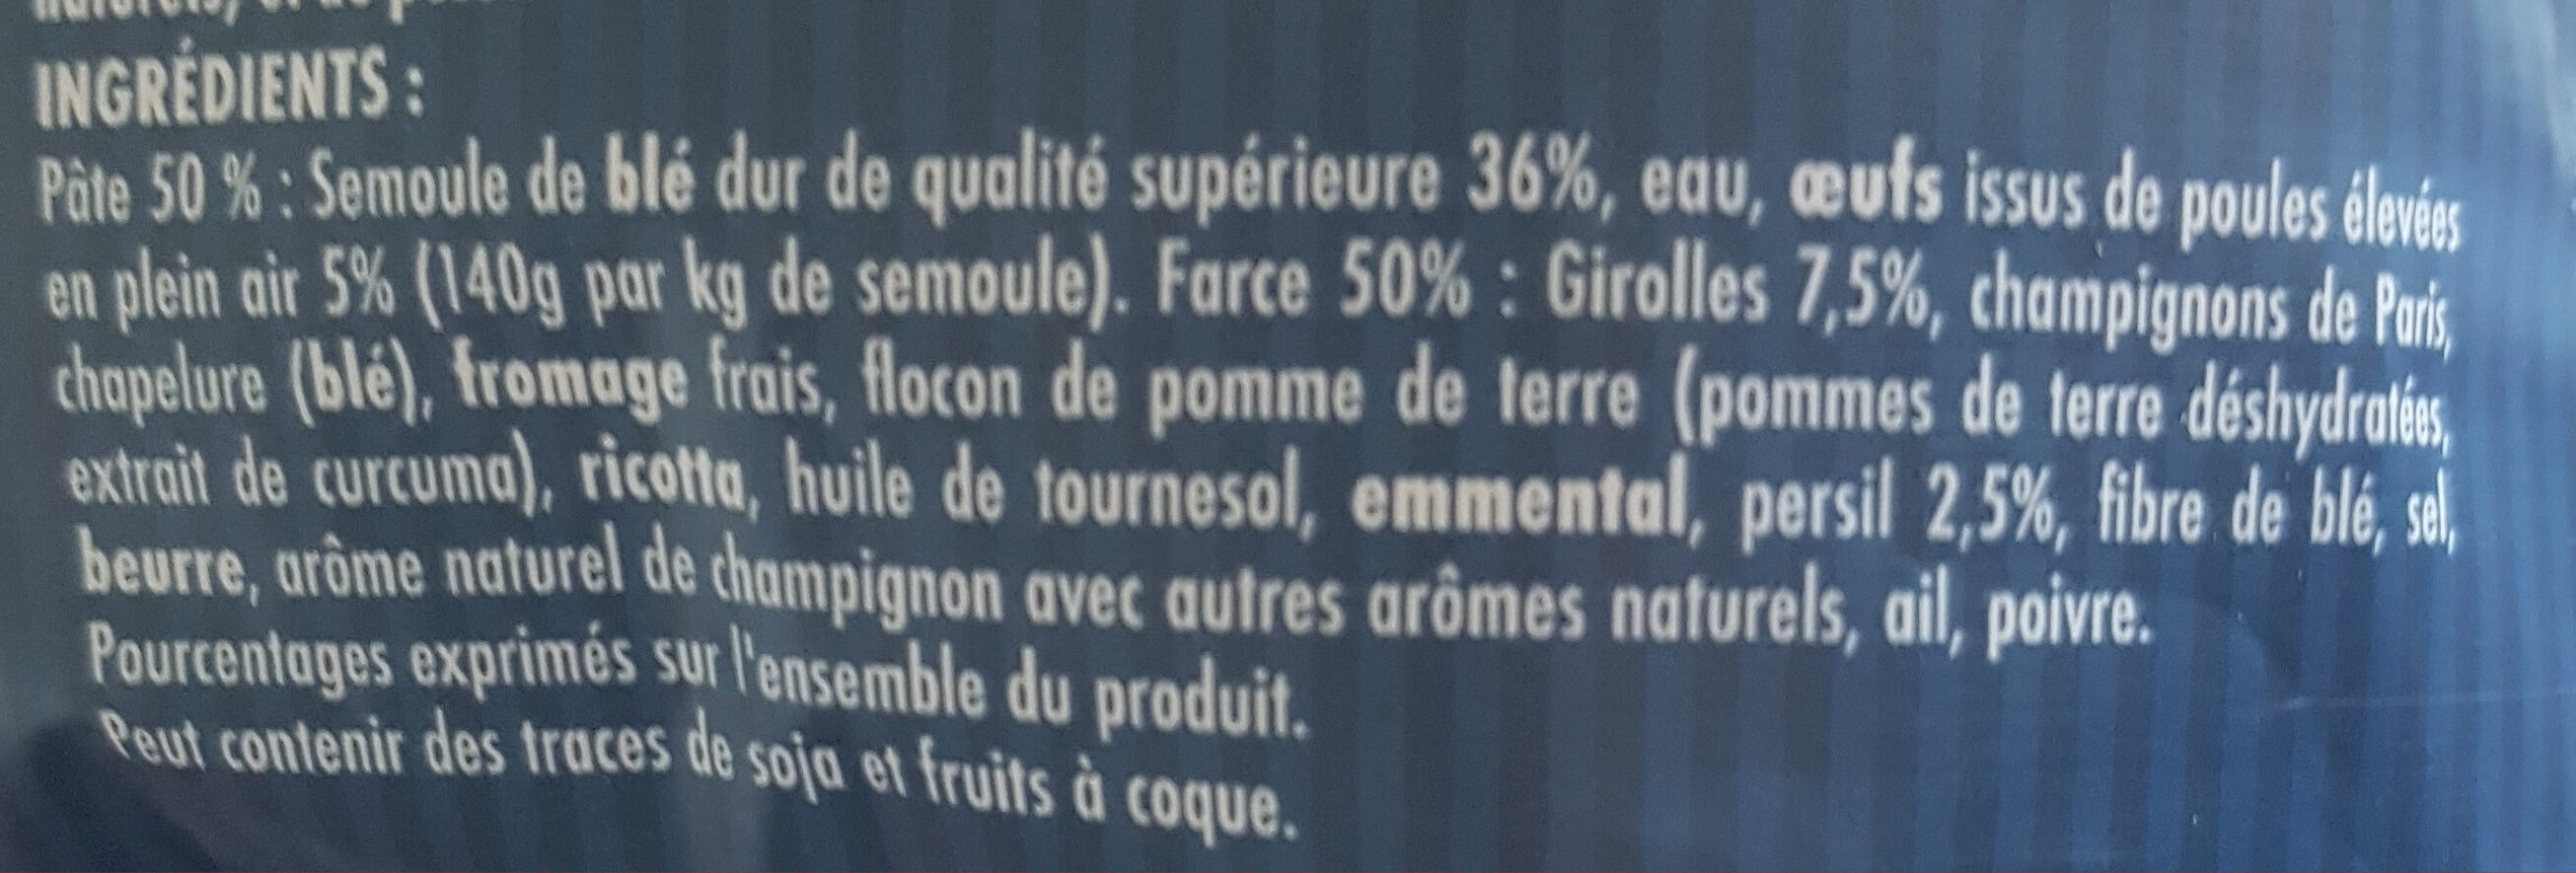 Pâtes fraîches aux girolles poêlées & persil de la Drôme - Ingredienser - fr